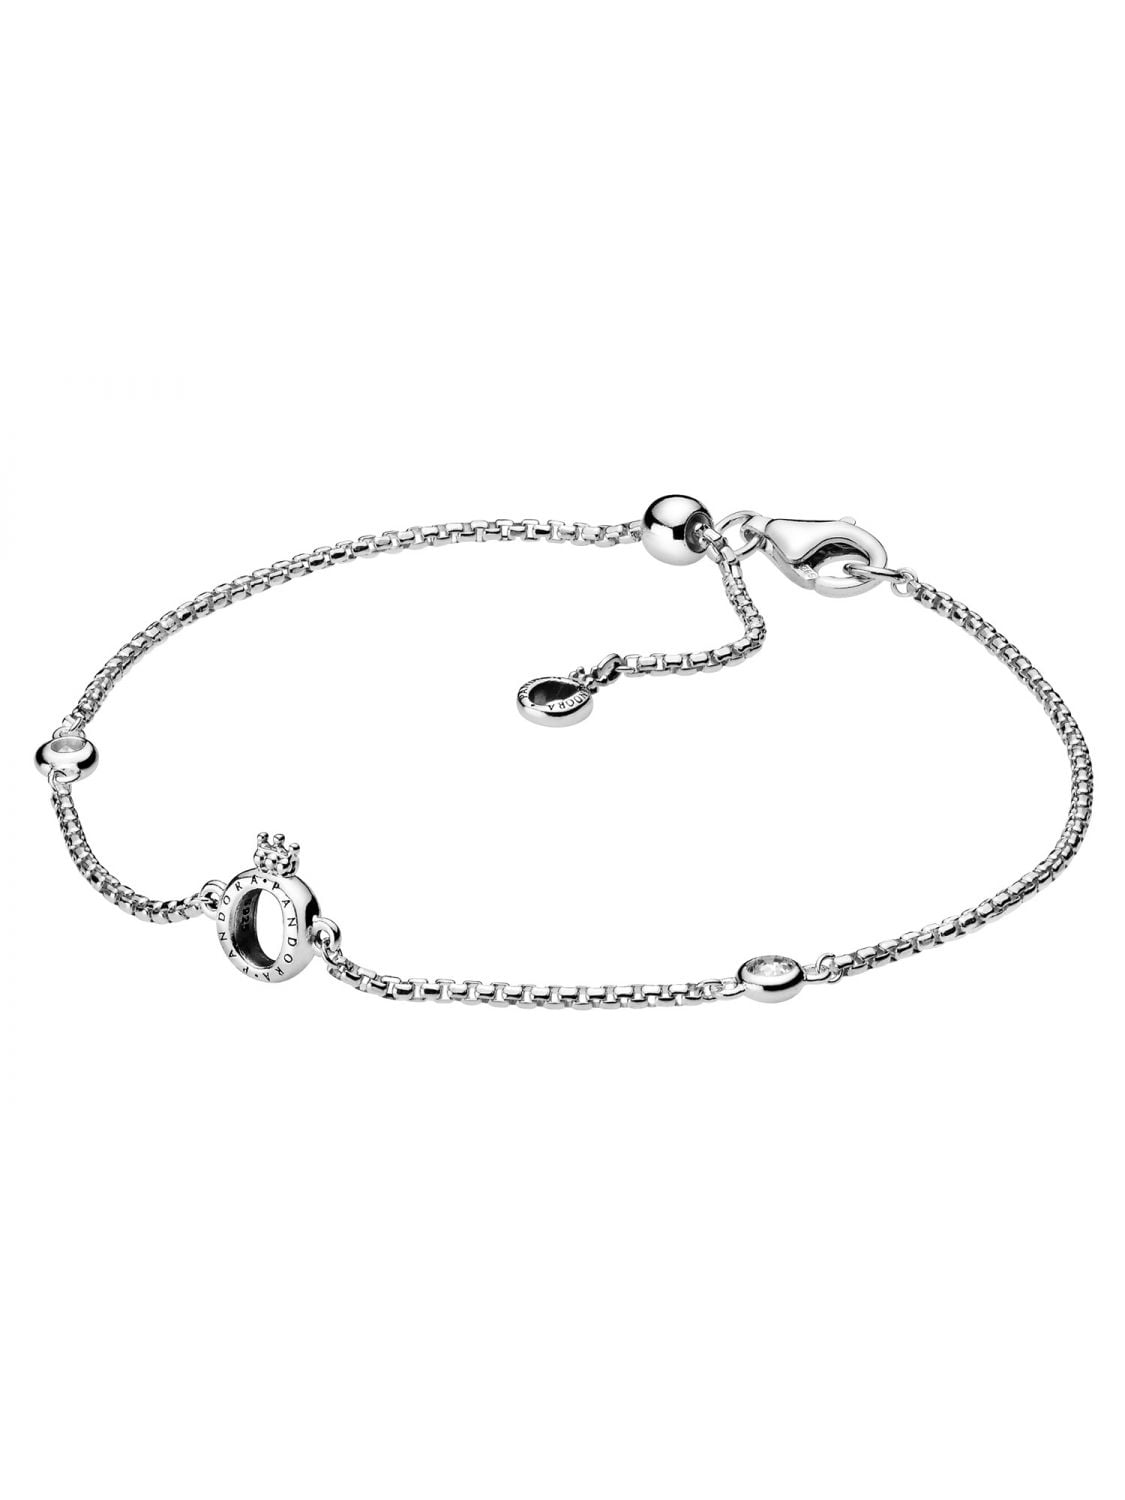 YOYO charms - New Pandora Crown O necklace ✓Authentic 92.5... | Facebook